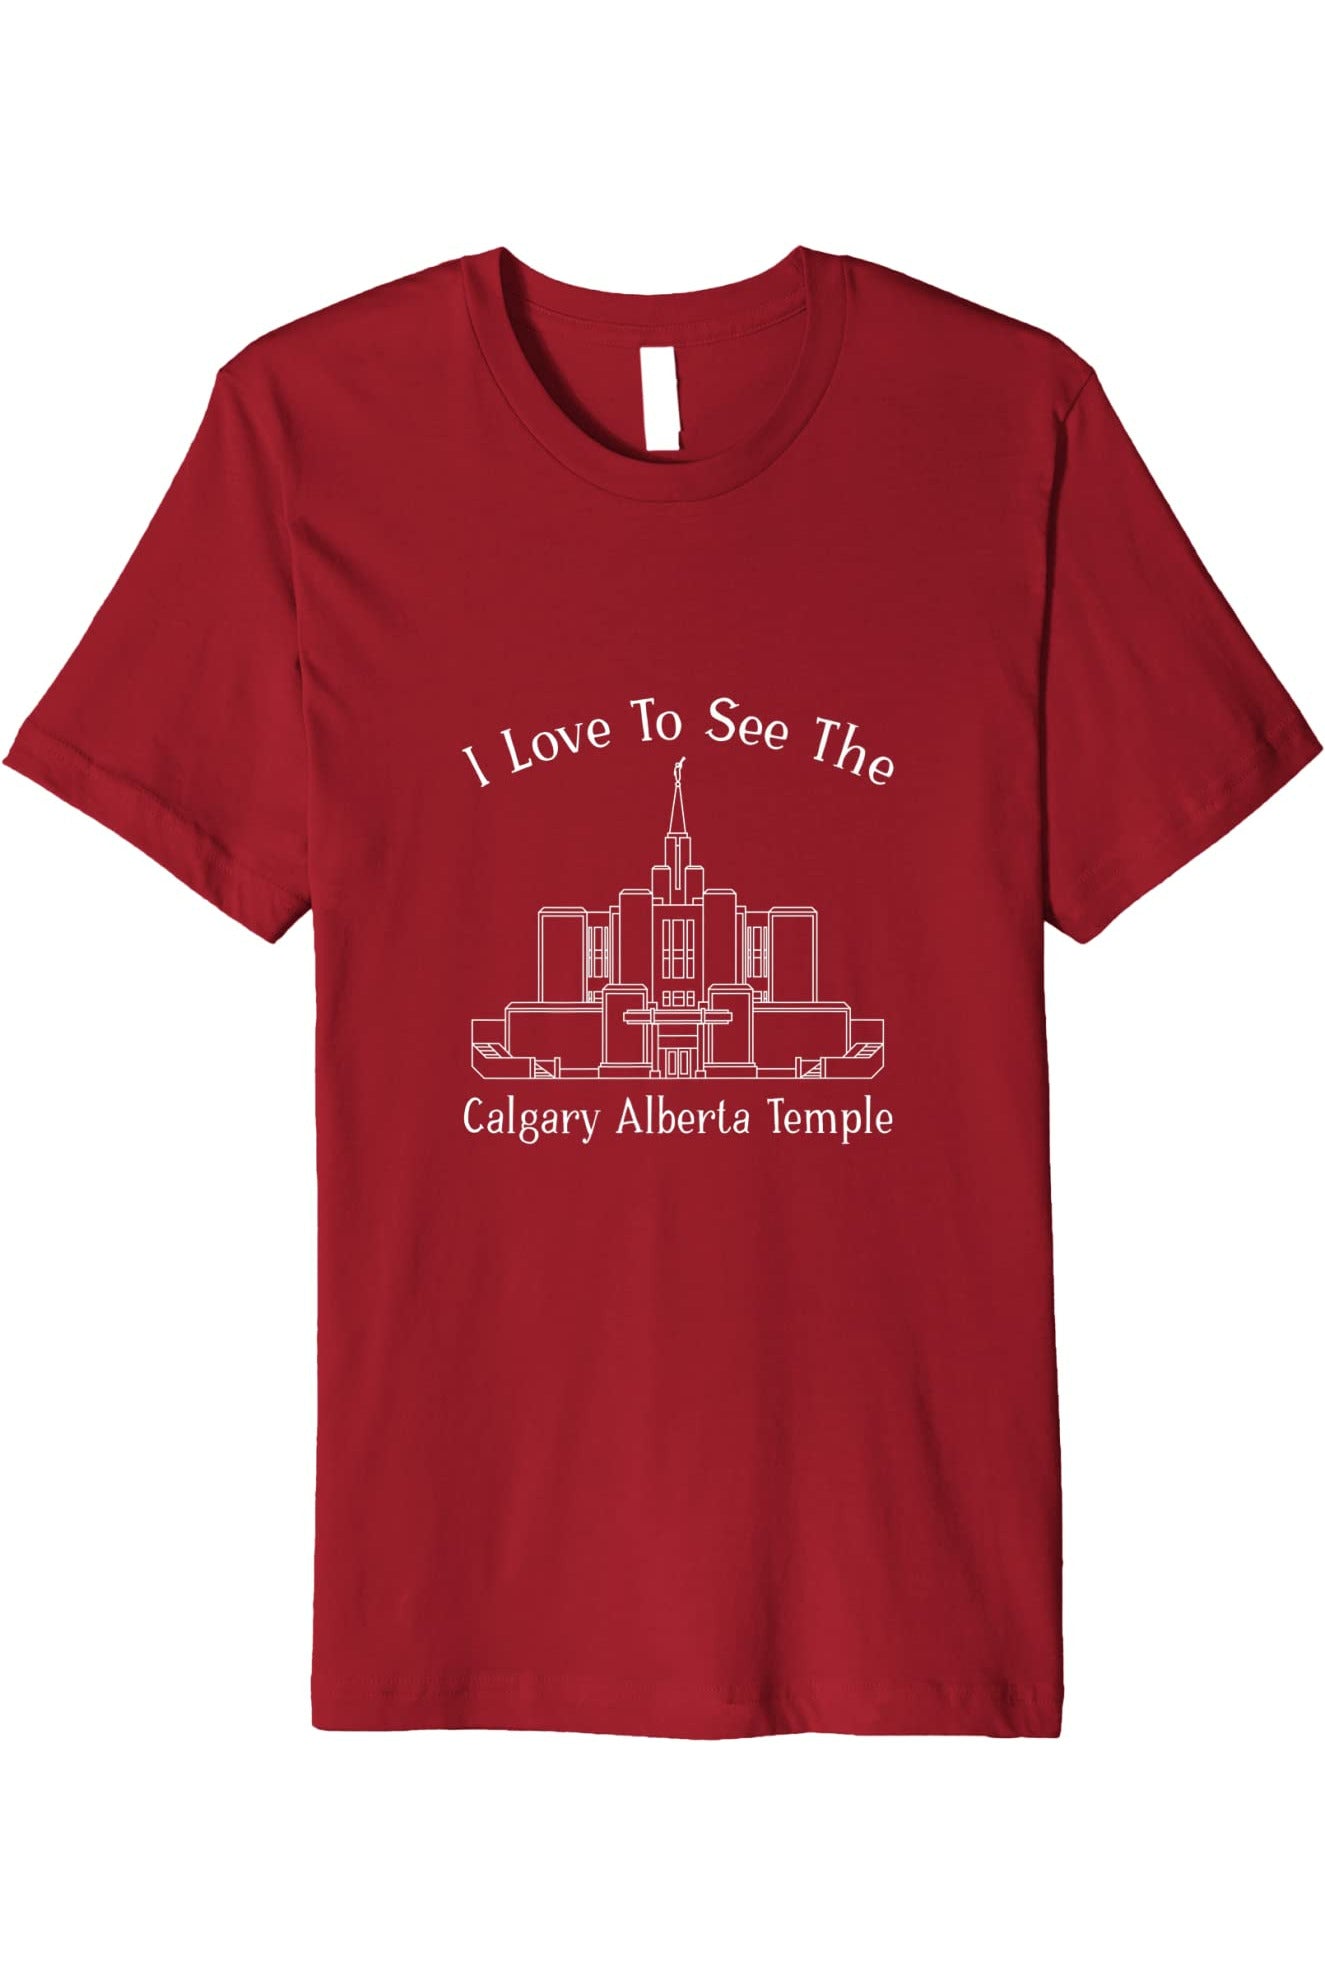 Calgary Alberta Temple T-Shirt - Premium - Happy Style (English) US